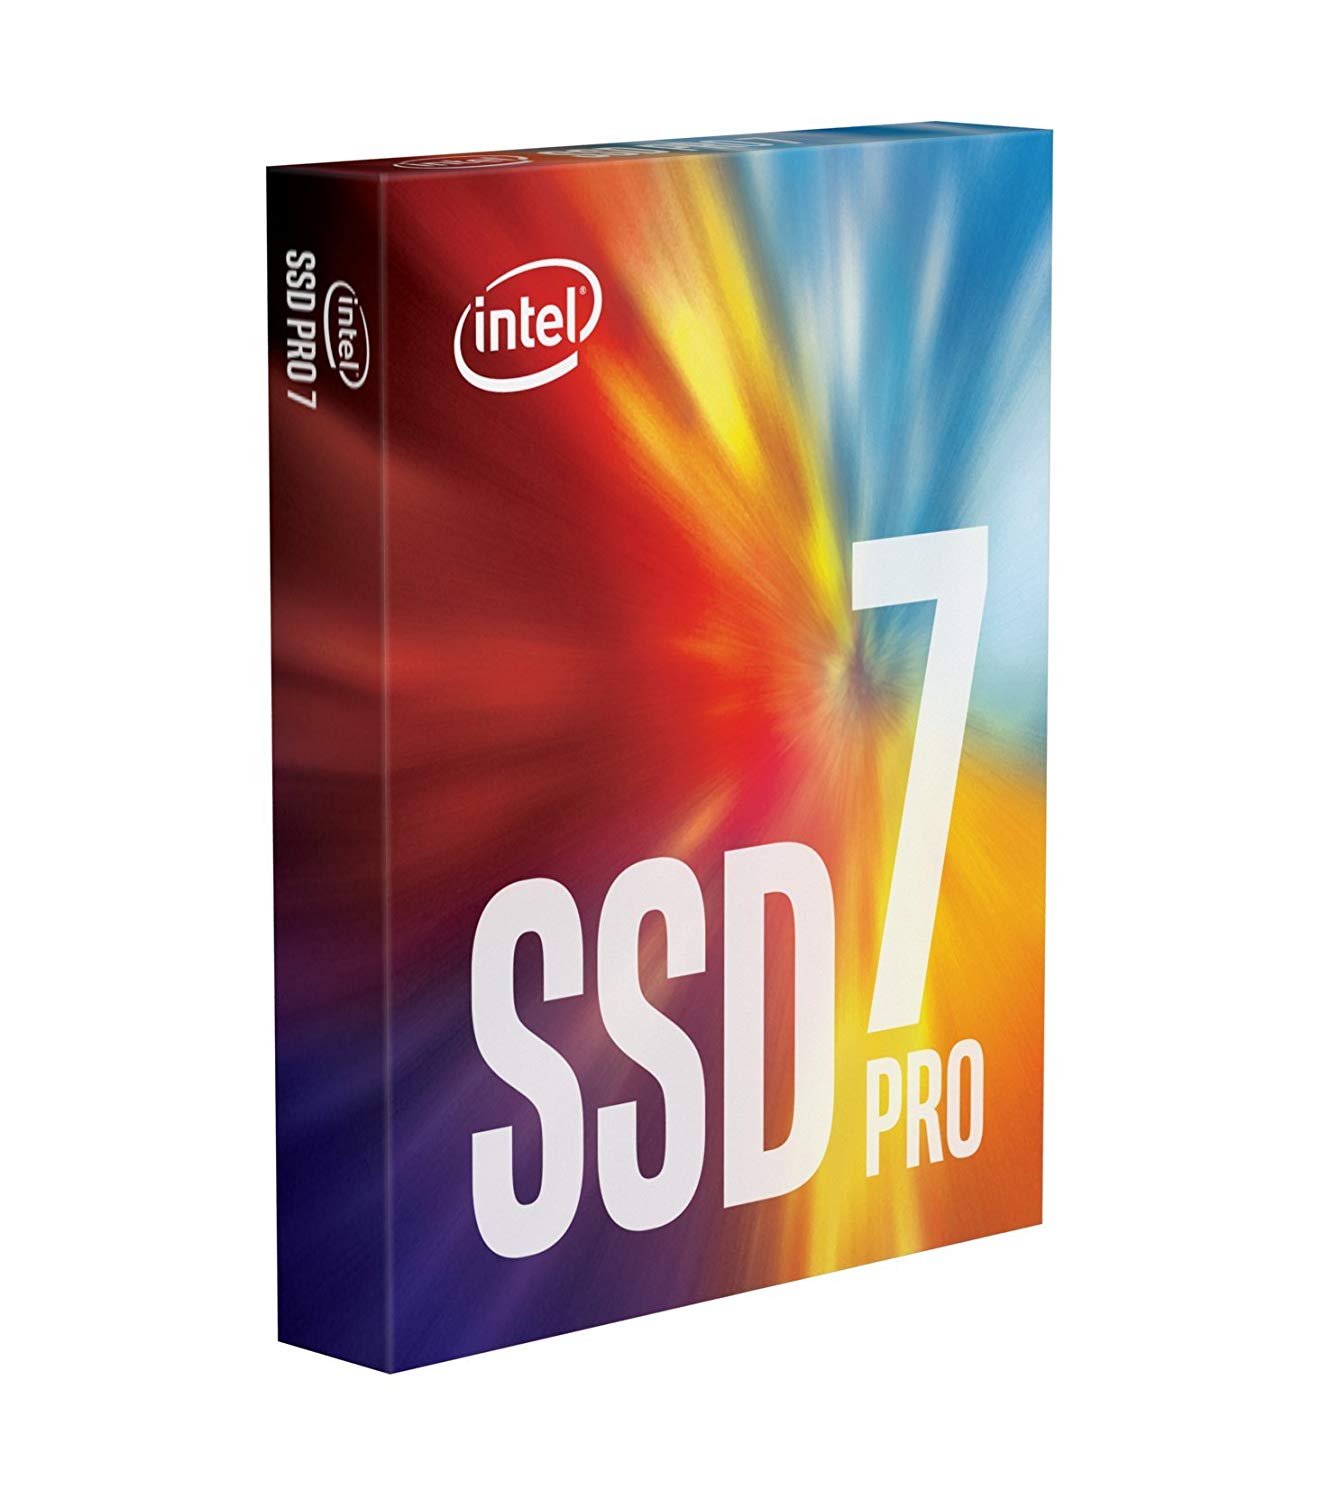 Intel 512GB Internal Solid State Drive m.2 2280 PCIe 3.0x4 SSDPEKKF512G8X1 - image 2 of 6